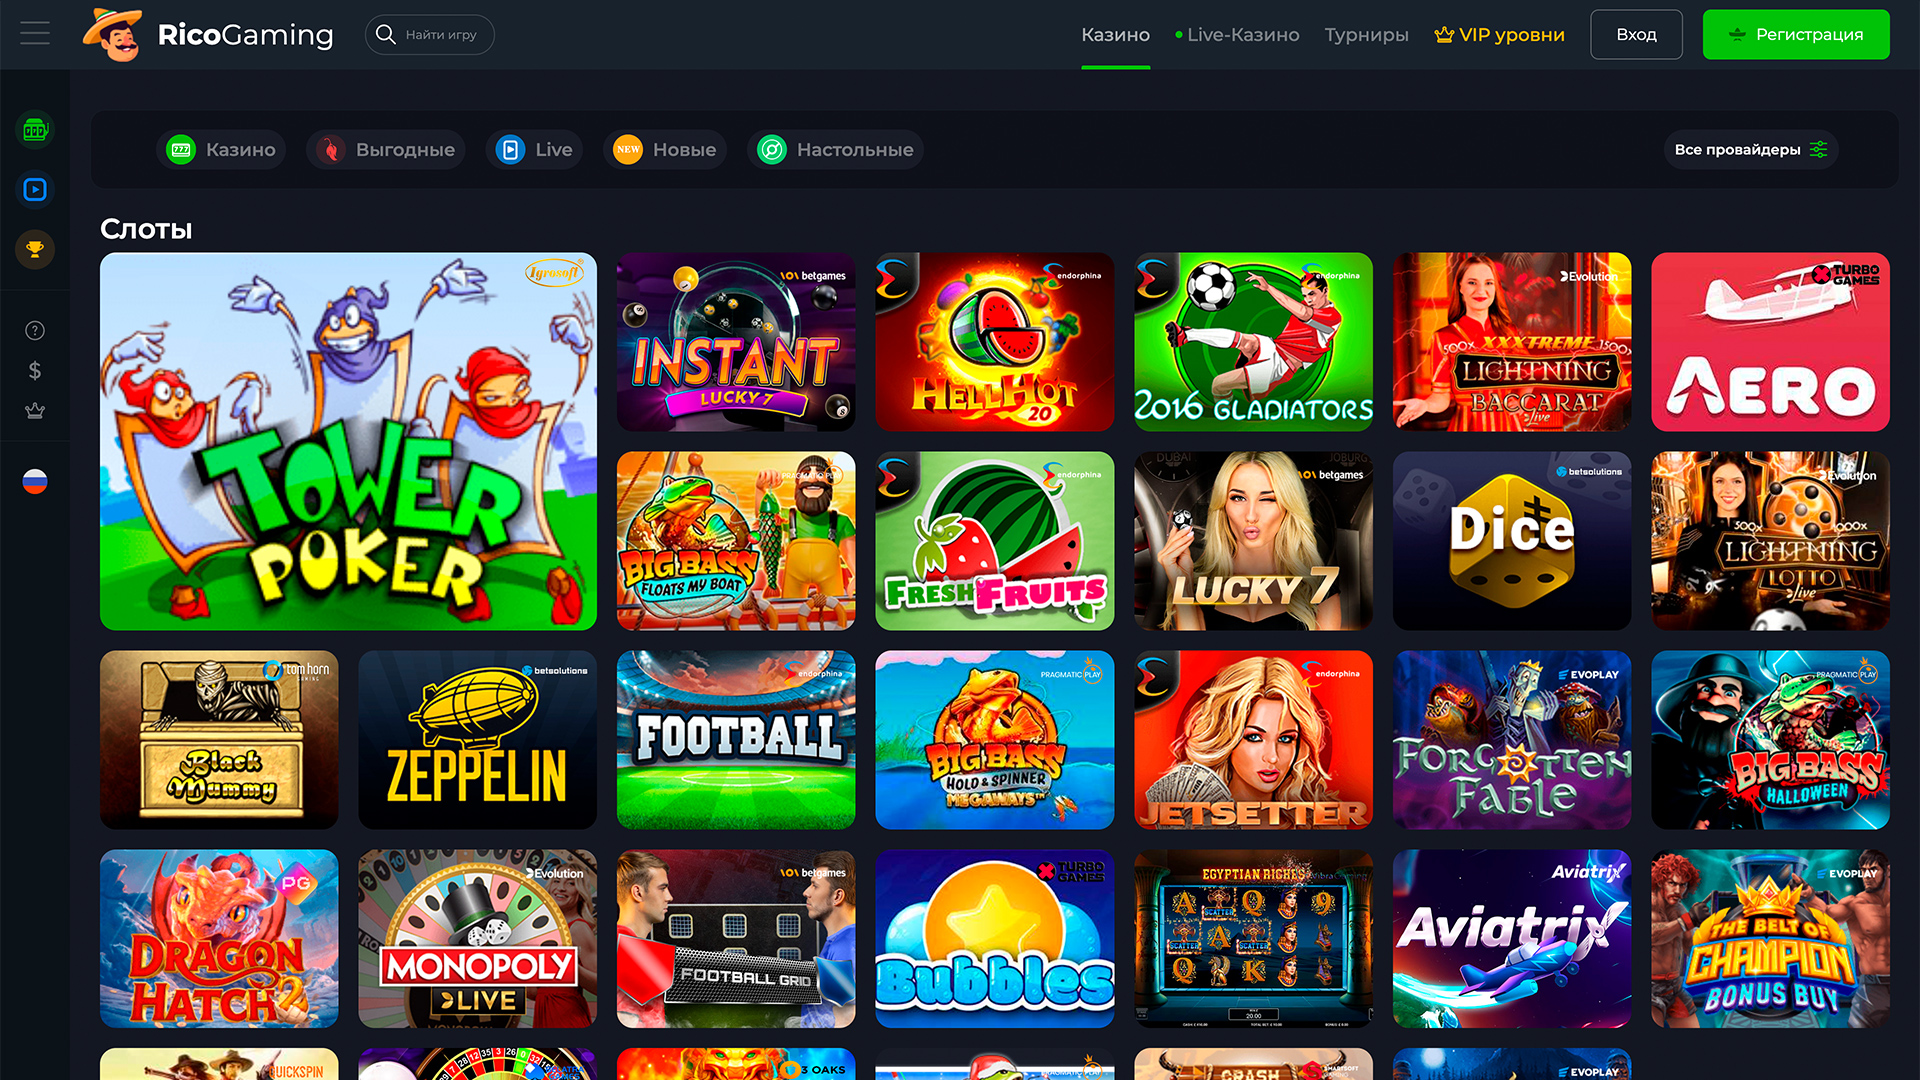 Online-Casino RicoGaming